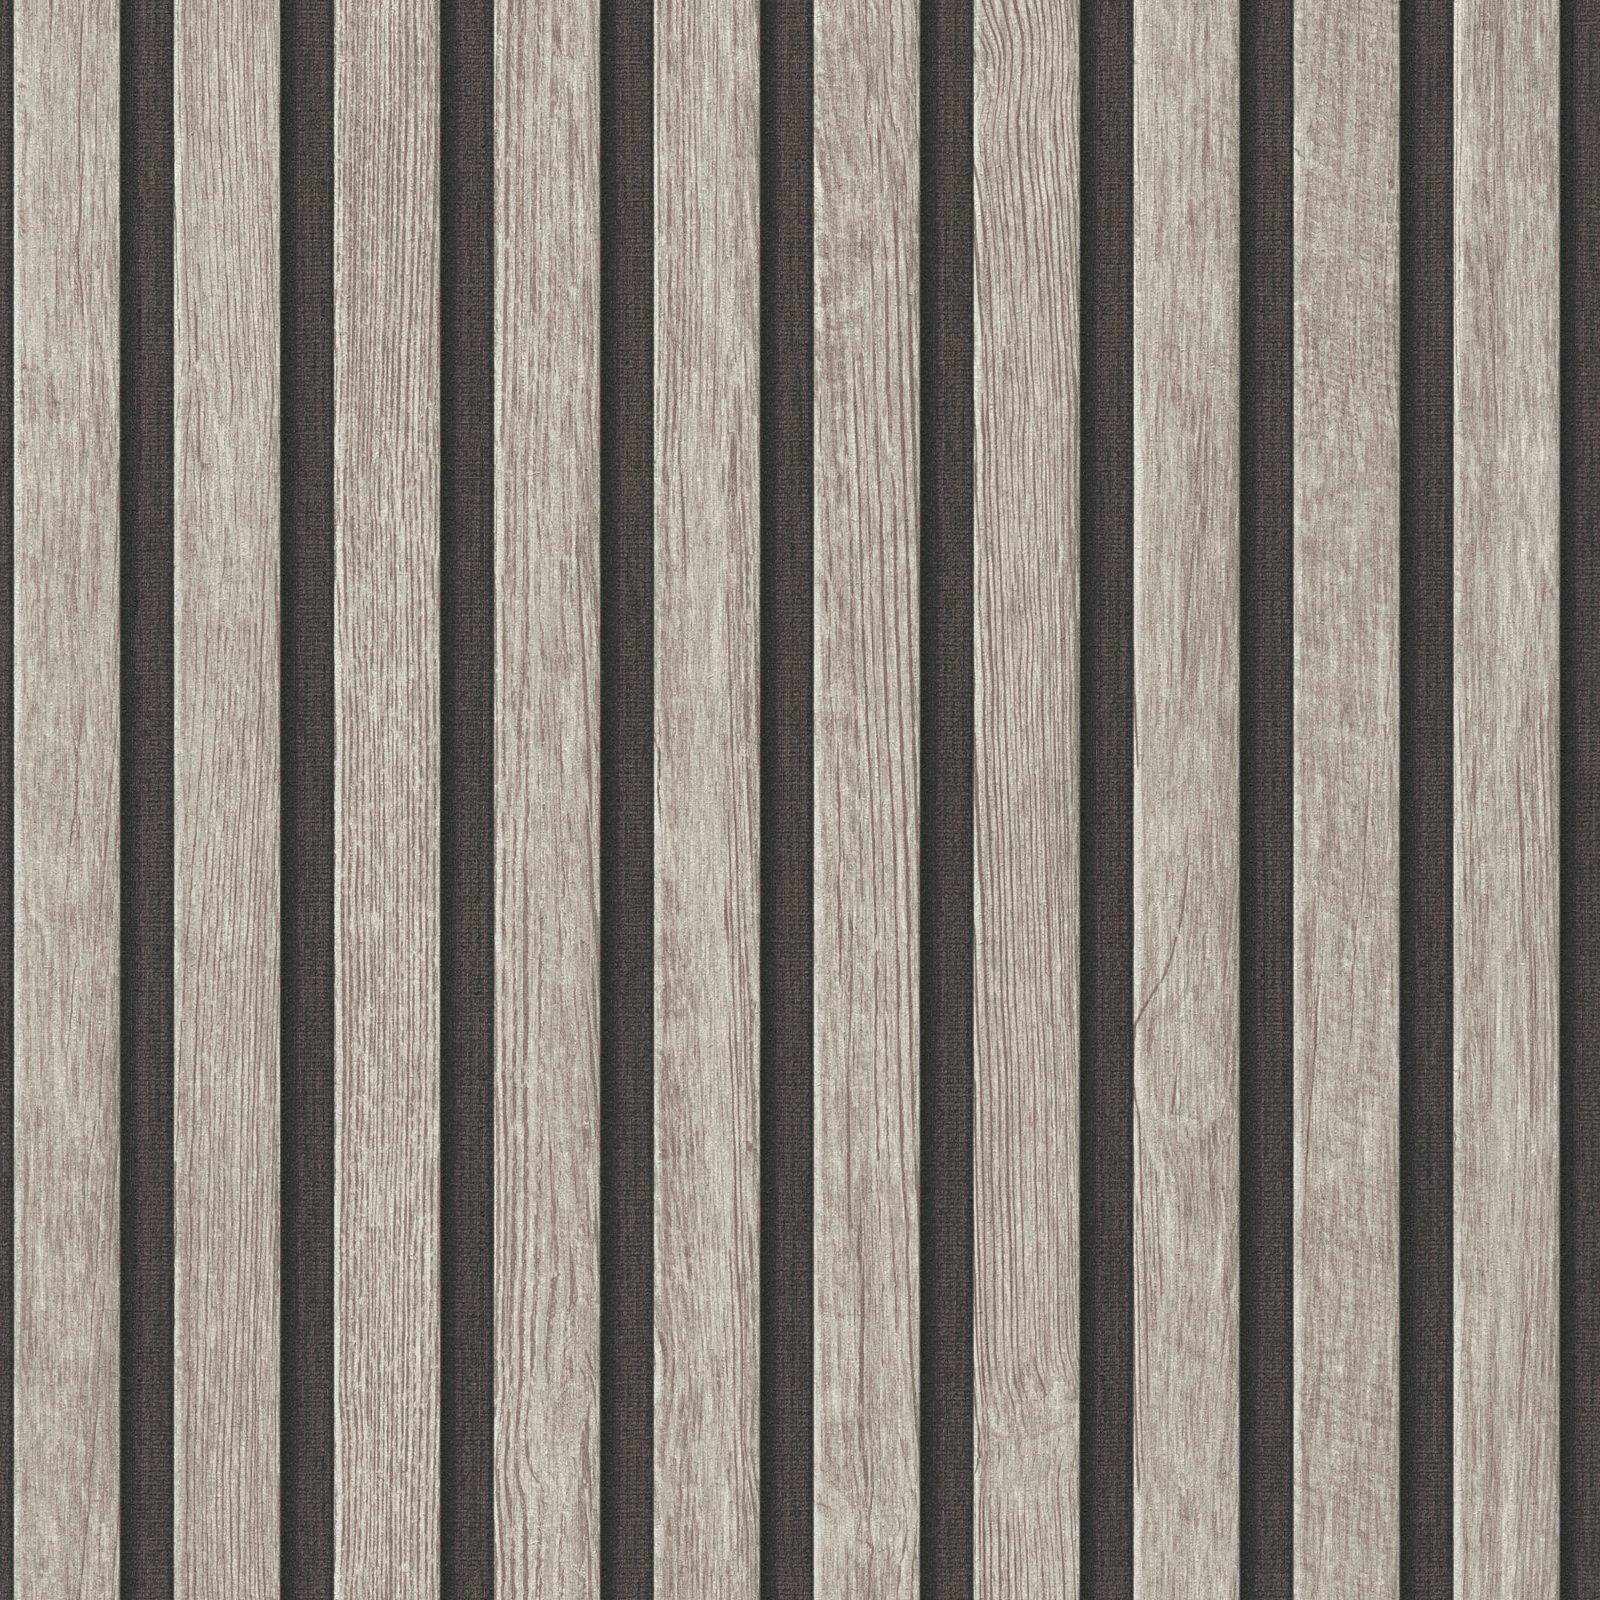 Photos - Wallpaper Wooden Slats Panelling 3D Wood Panel Stripe Light Grey Black 